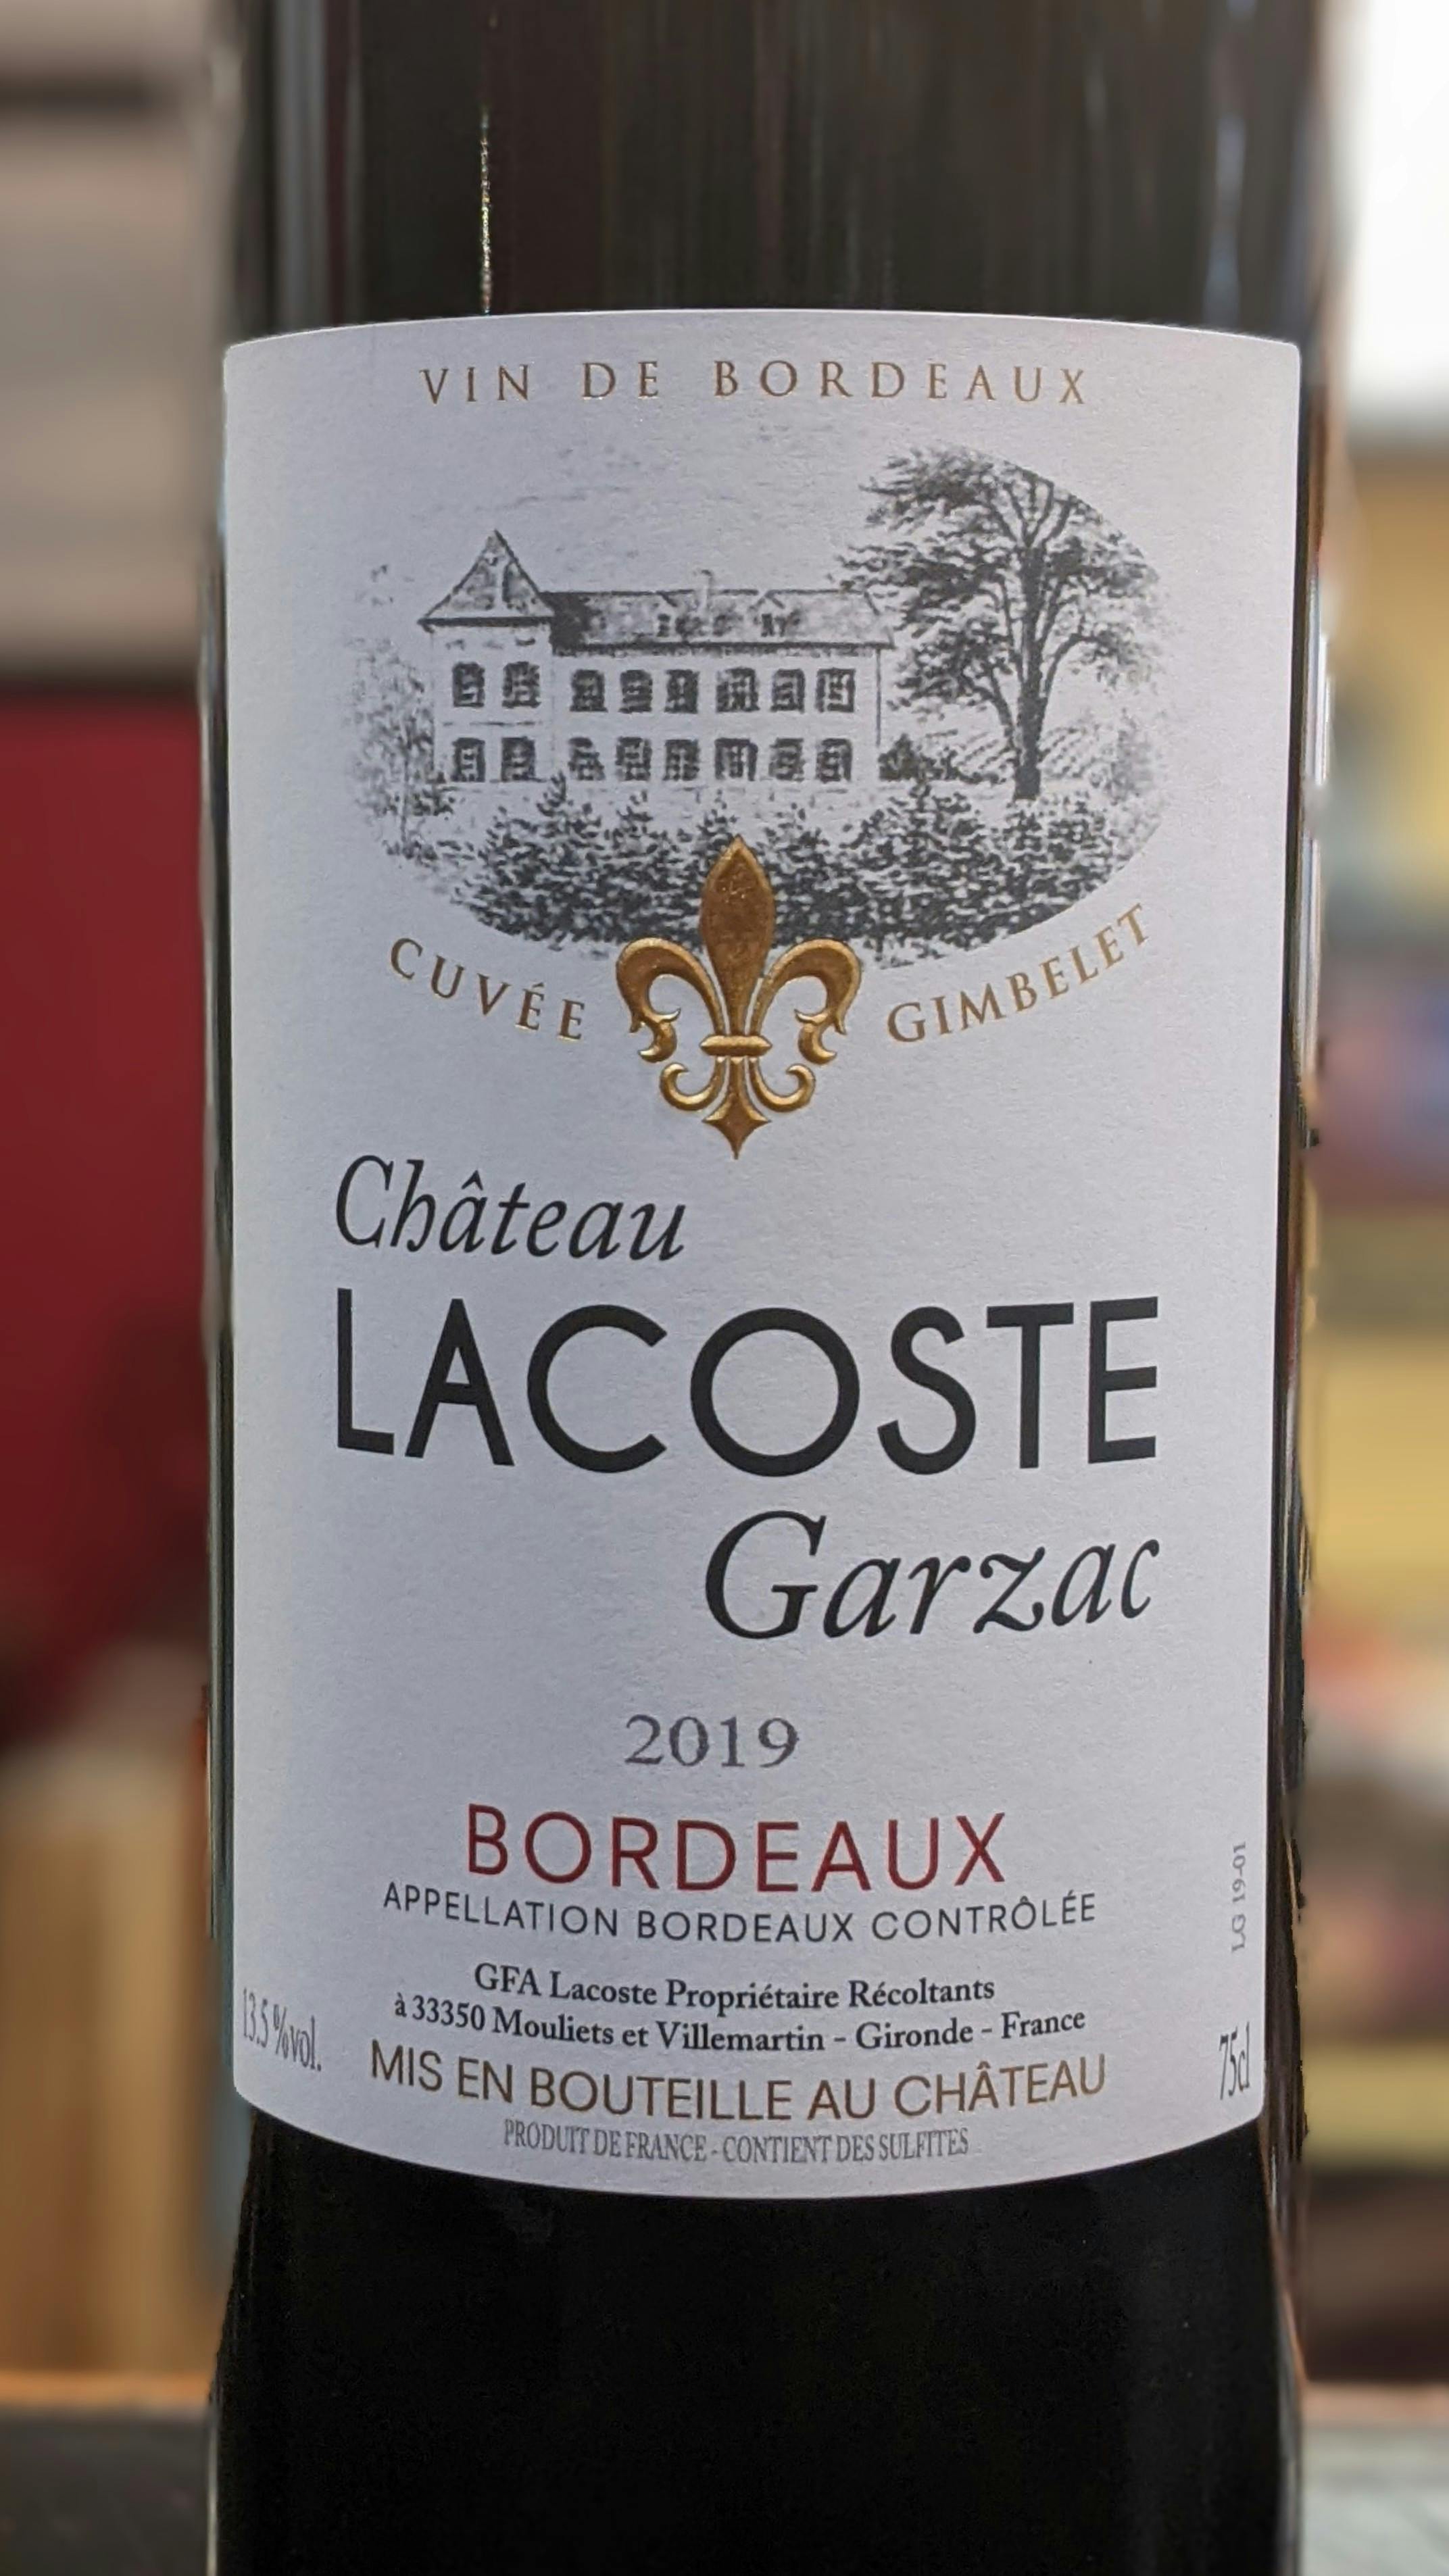 Byen Tanzania besøg Chateau Reynaud Lacoste Lacoste Garzac Bordeaux 2019 750ml - Stone Gate  Wine & Spirits